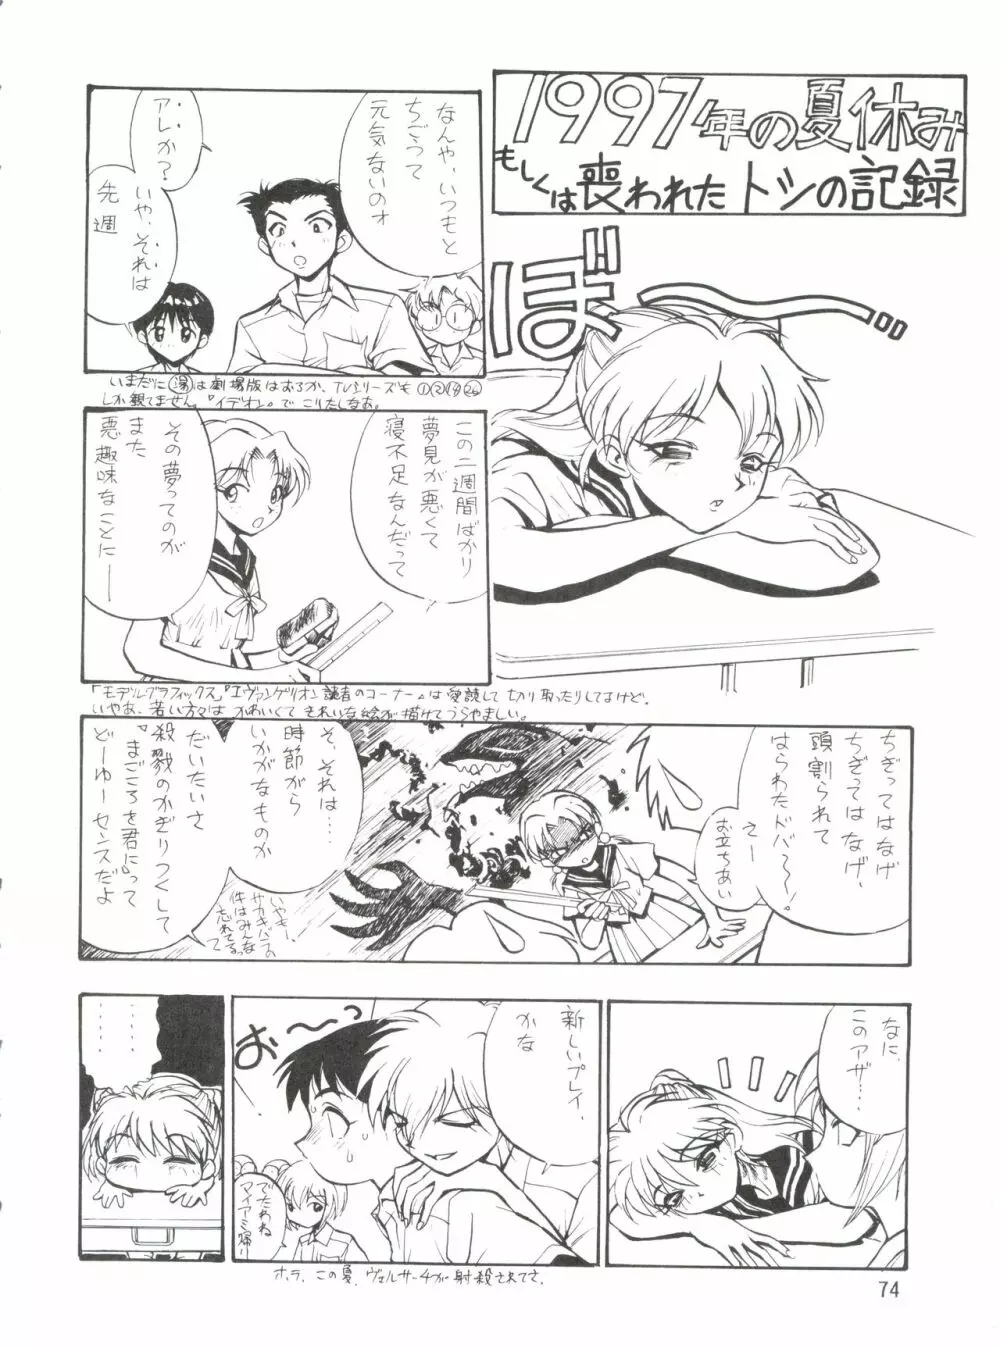 1997 WINTER 電撃犬王 75ページ